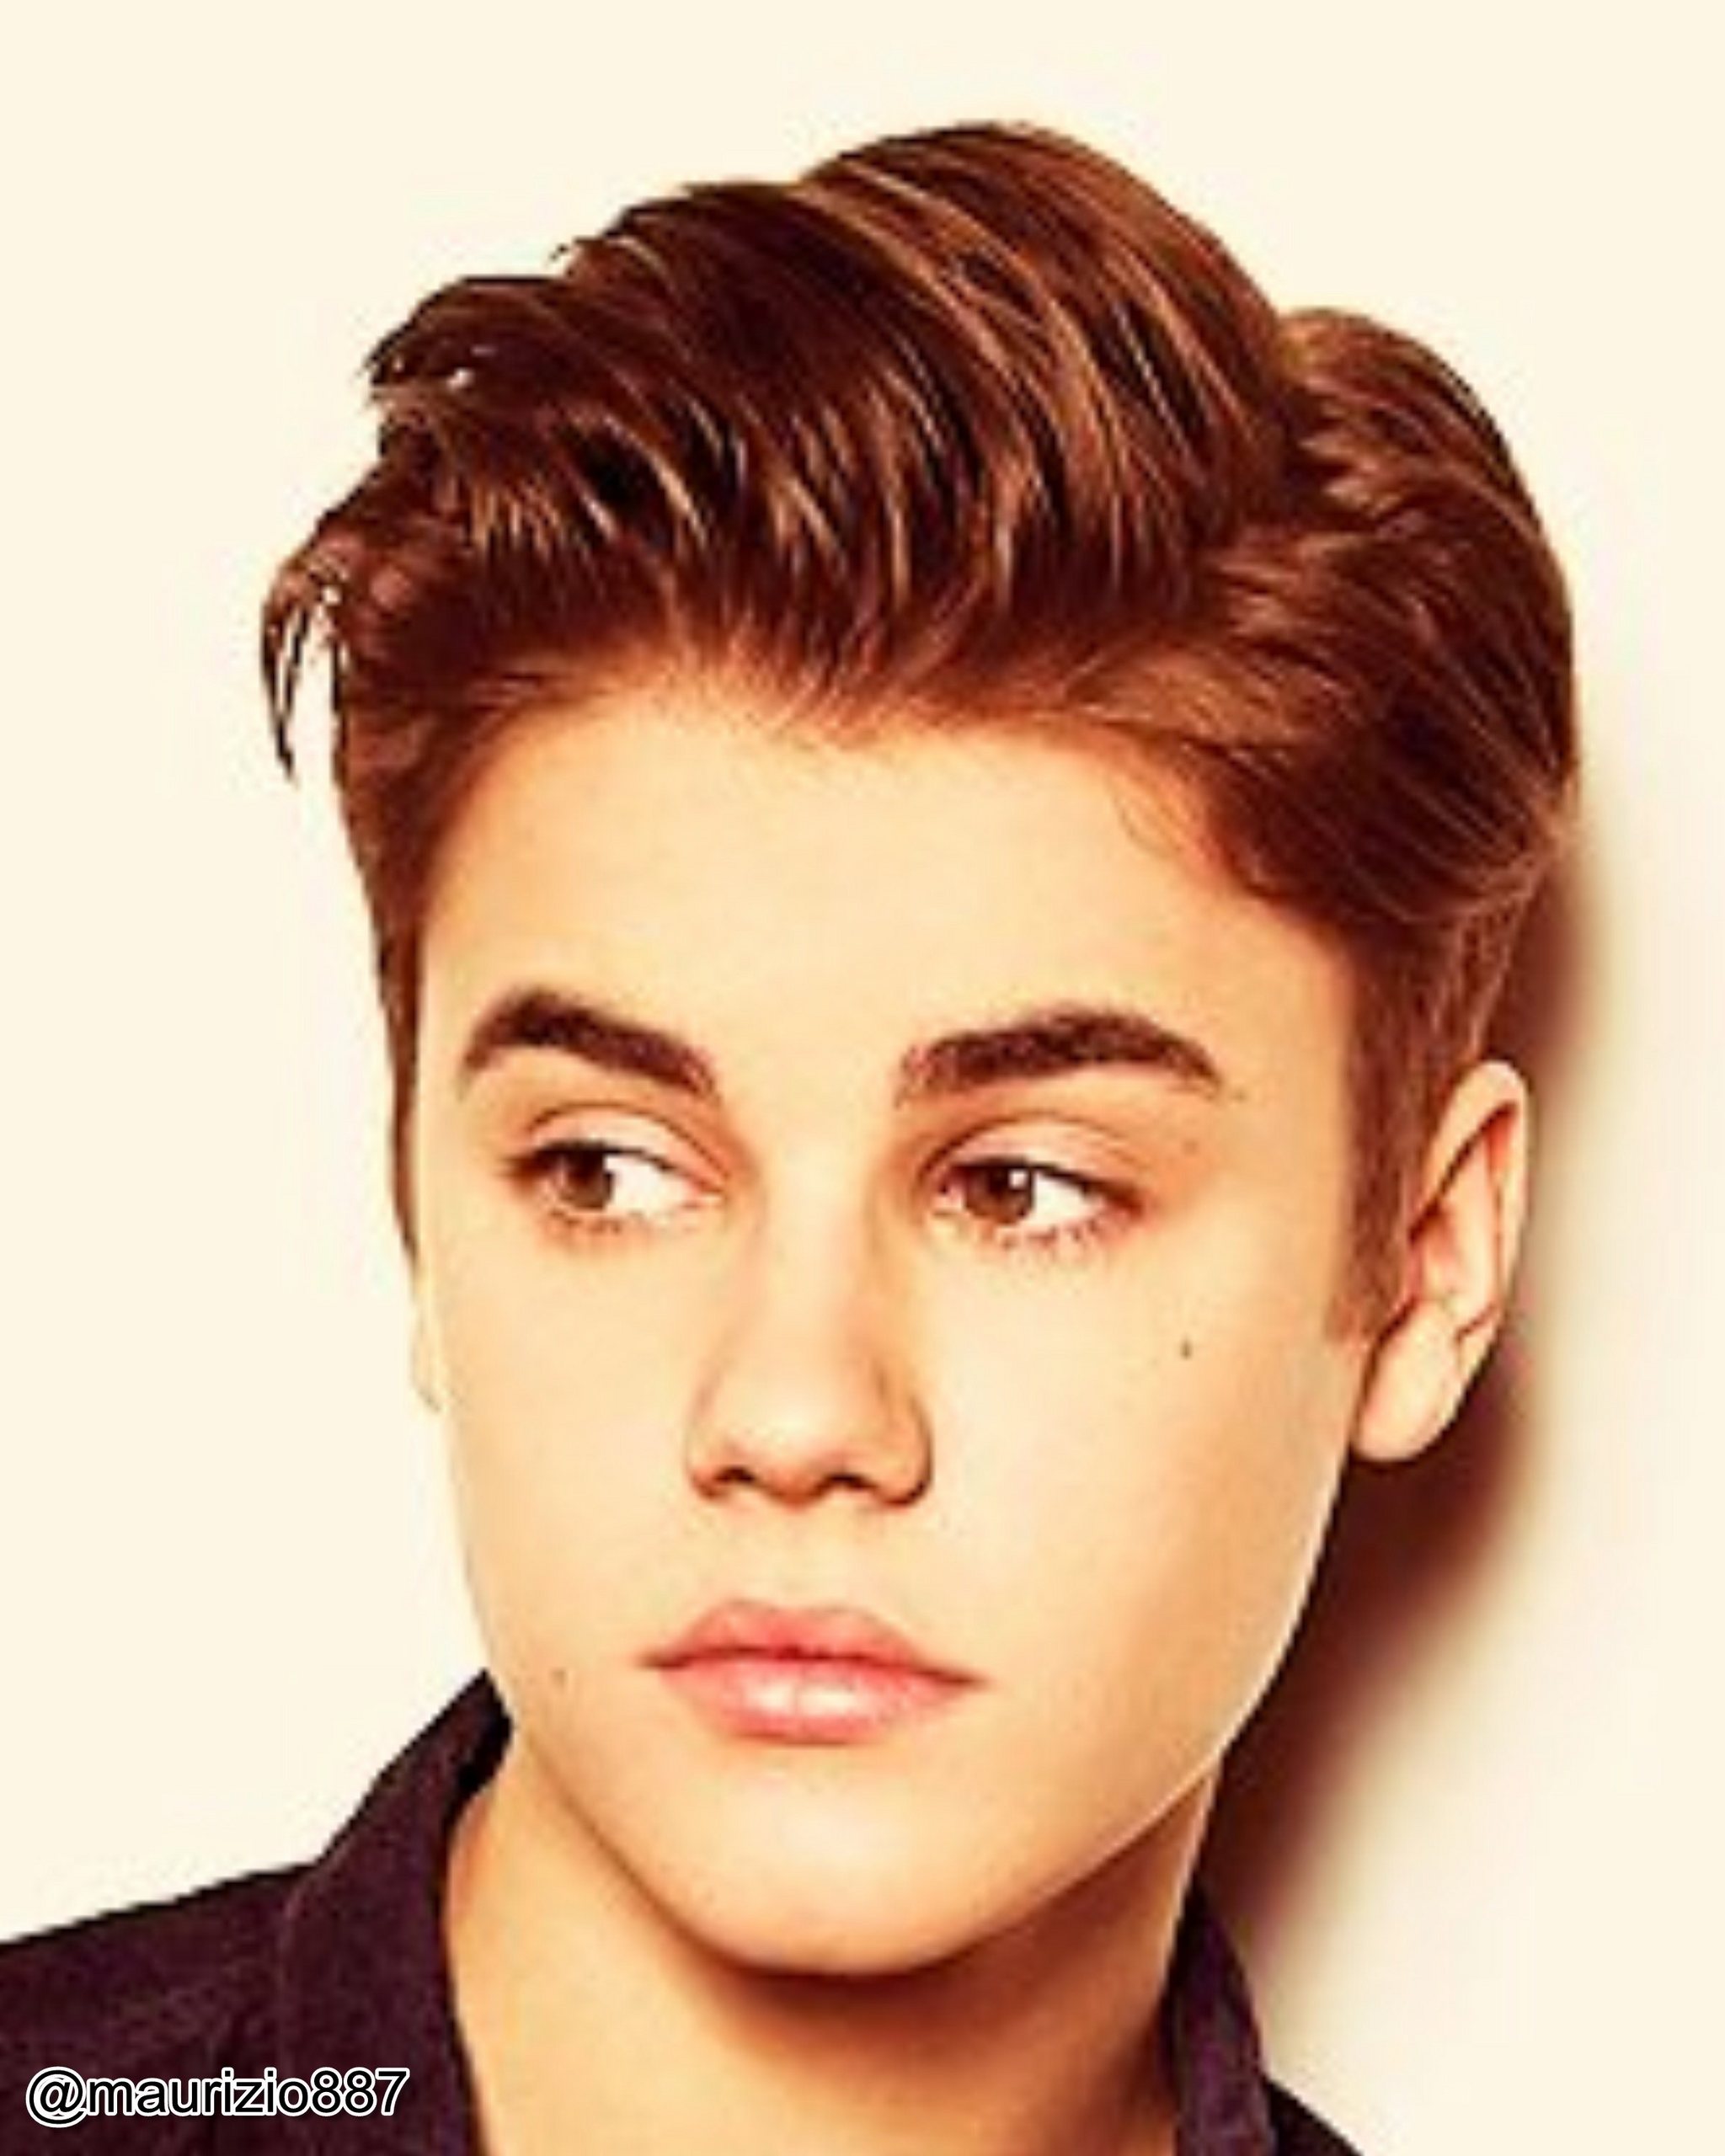 bieber, photoshoot,2012 - Justin Bieber Photo (29919047) - Fanpop